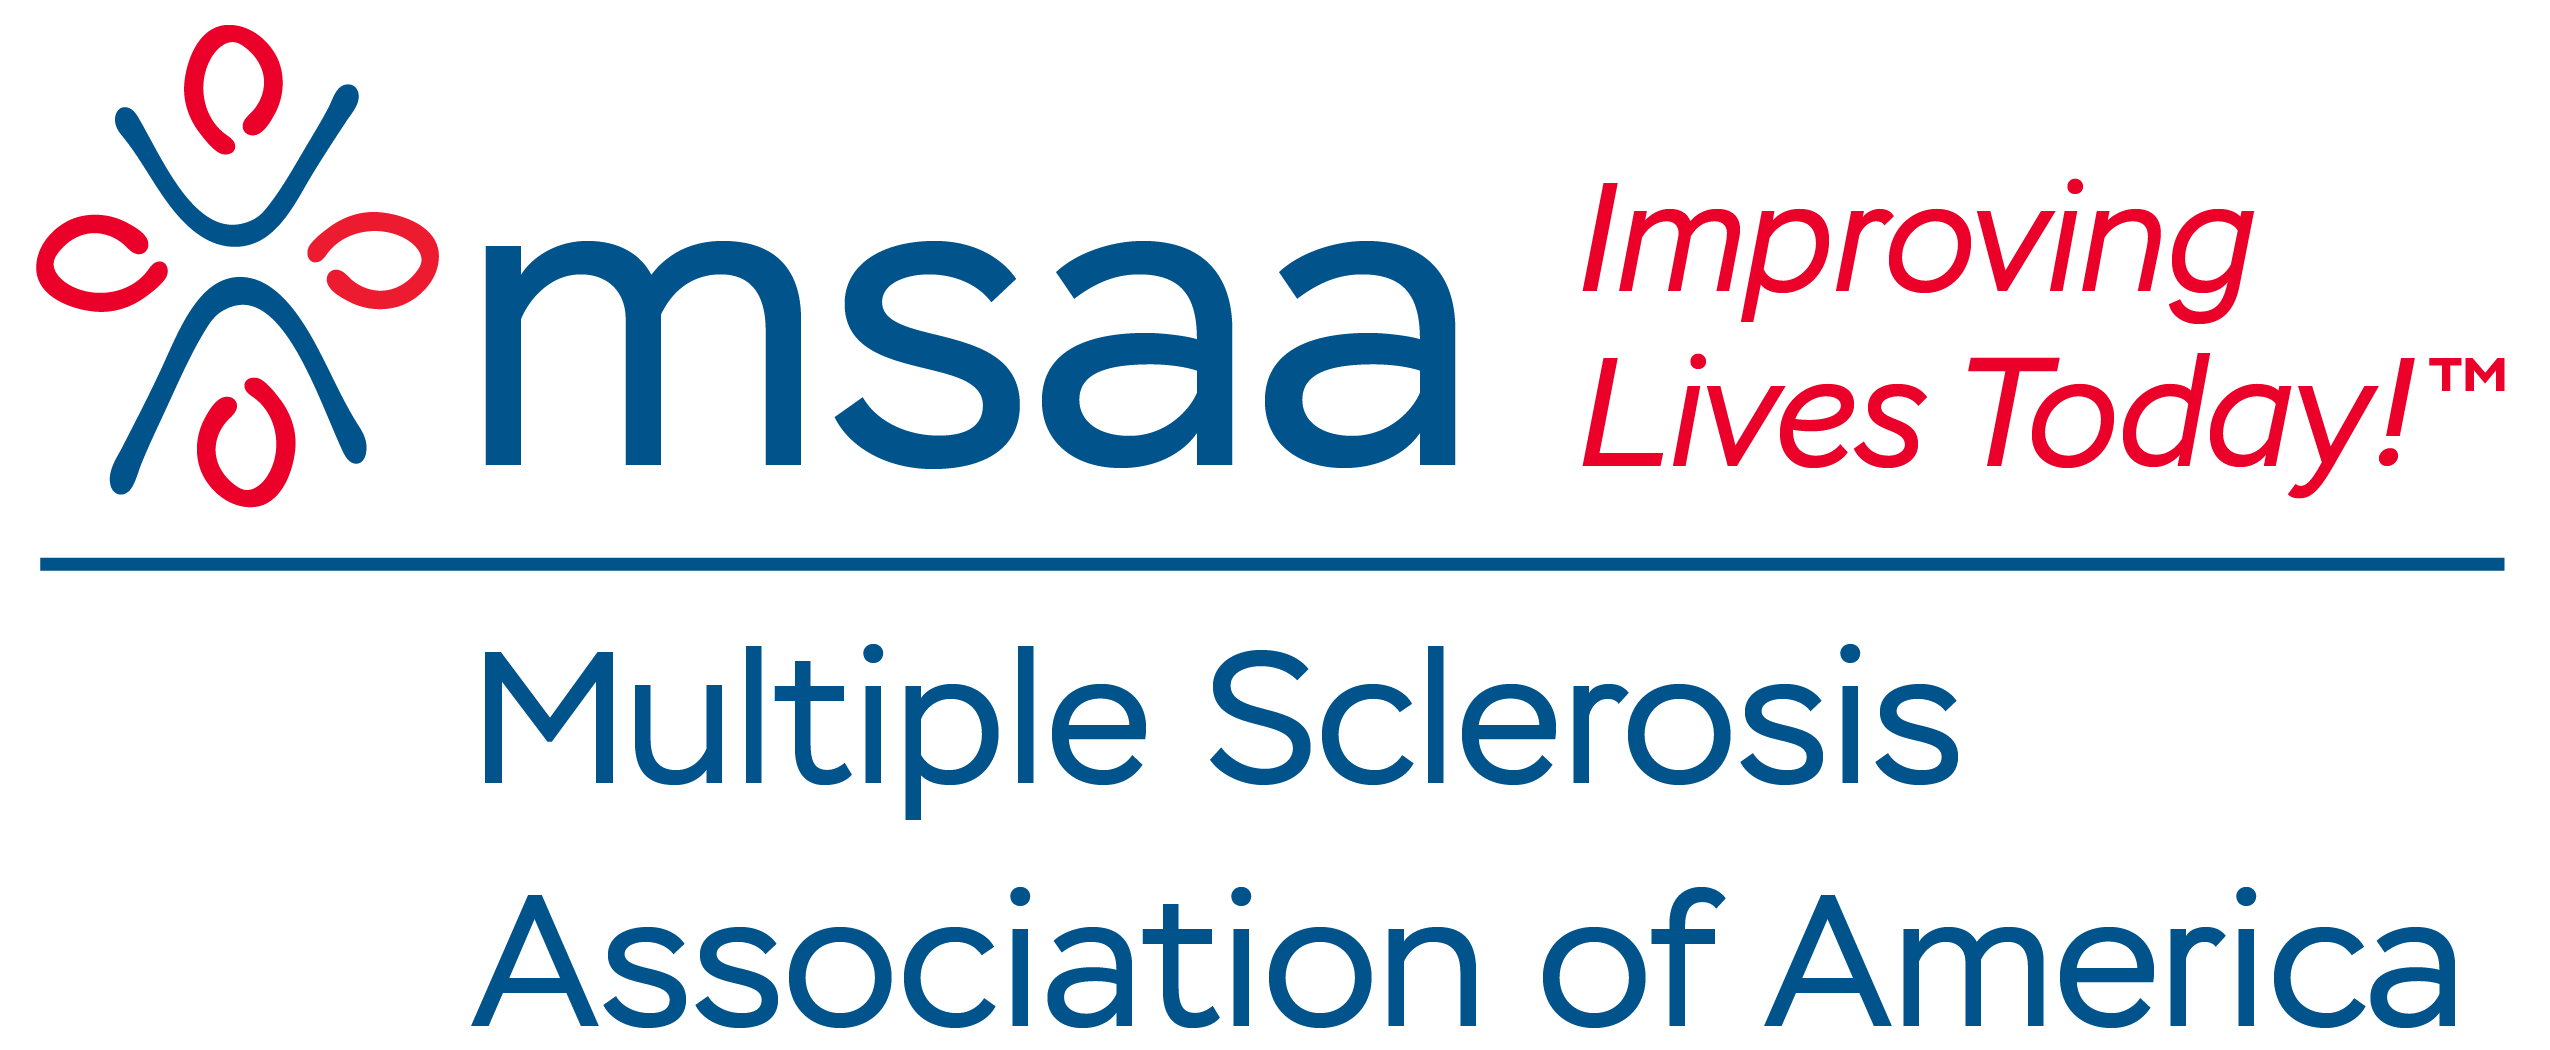 Multiple Sclerosis Association of America/MSAA logo